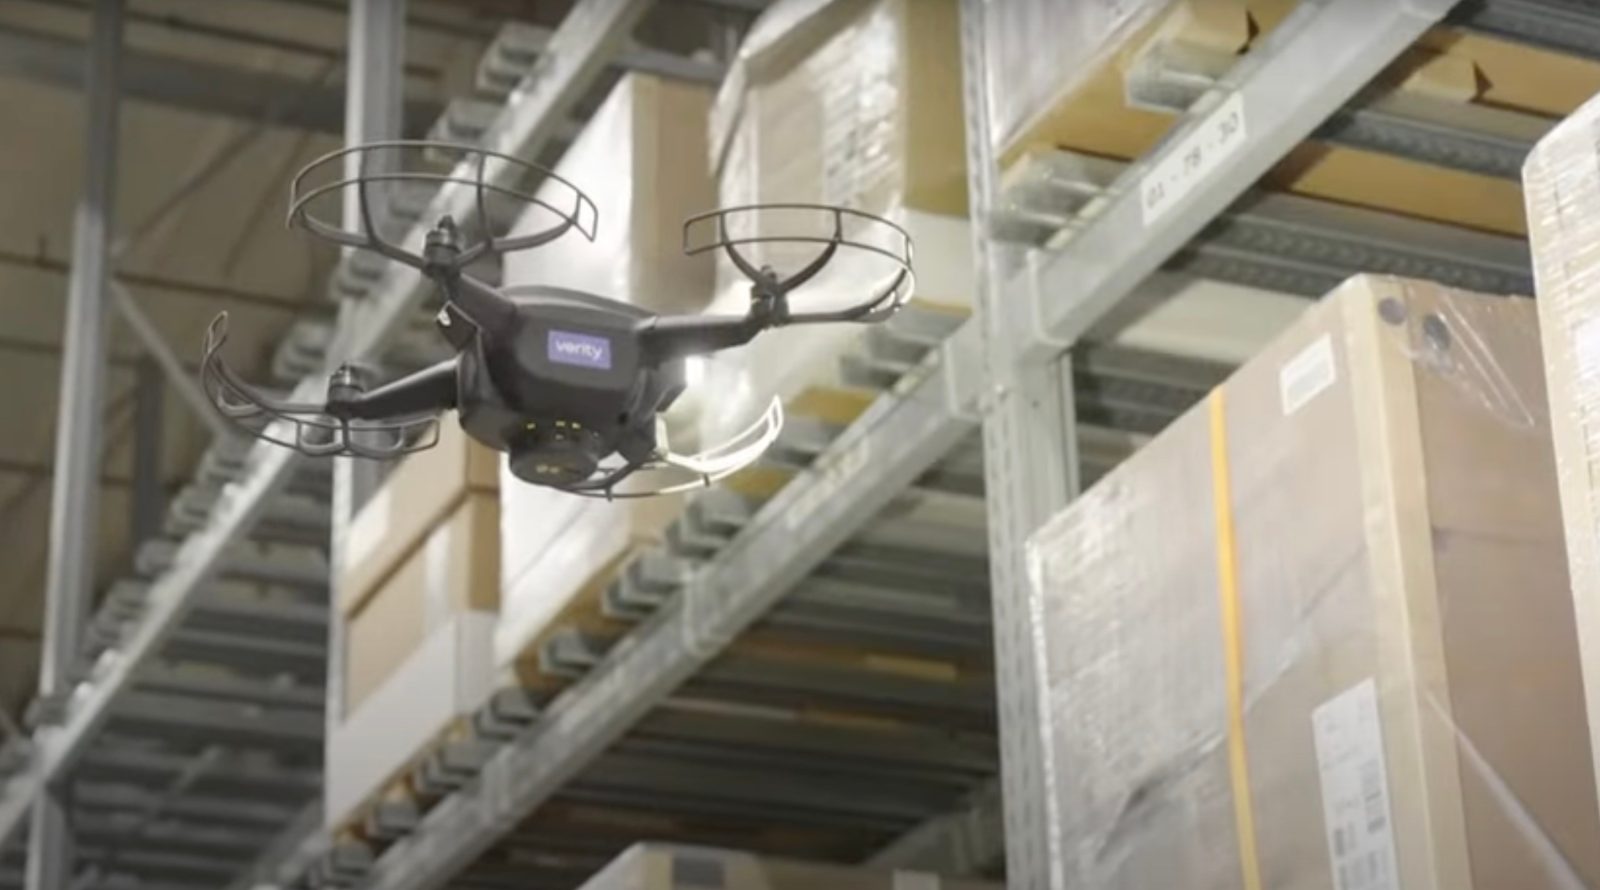 Verity drone warehouse